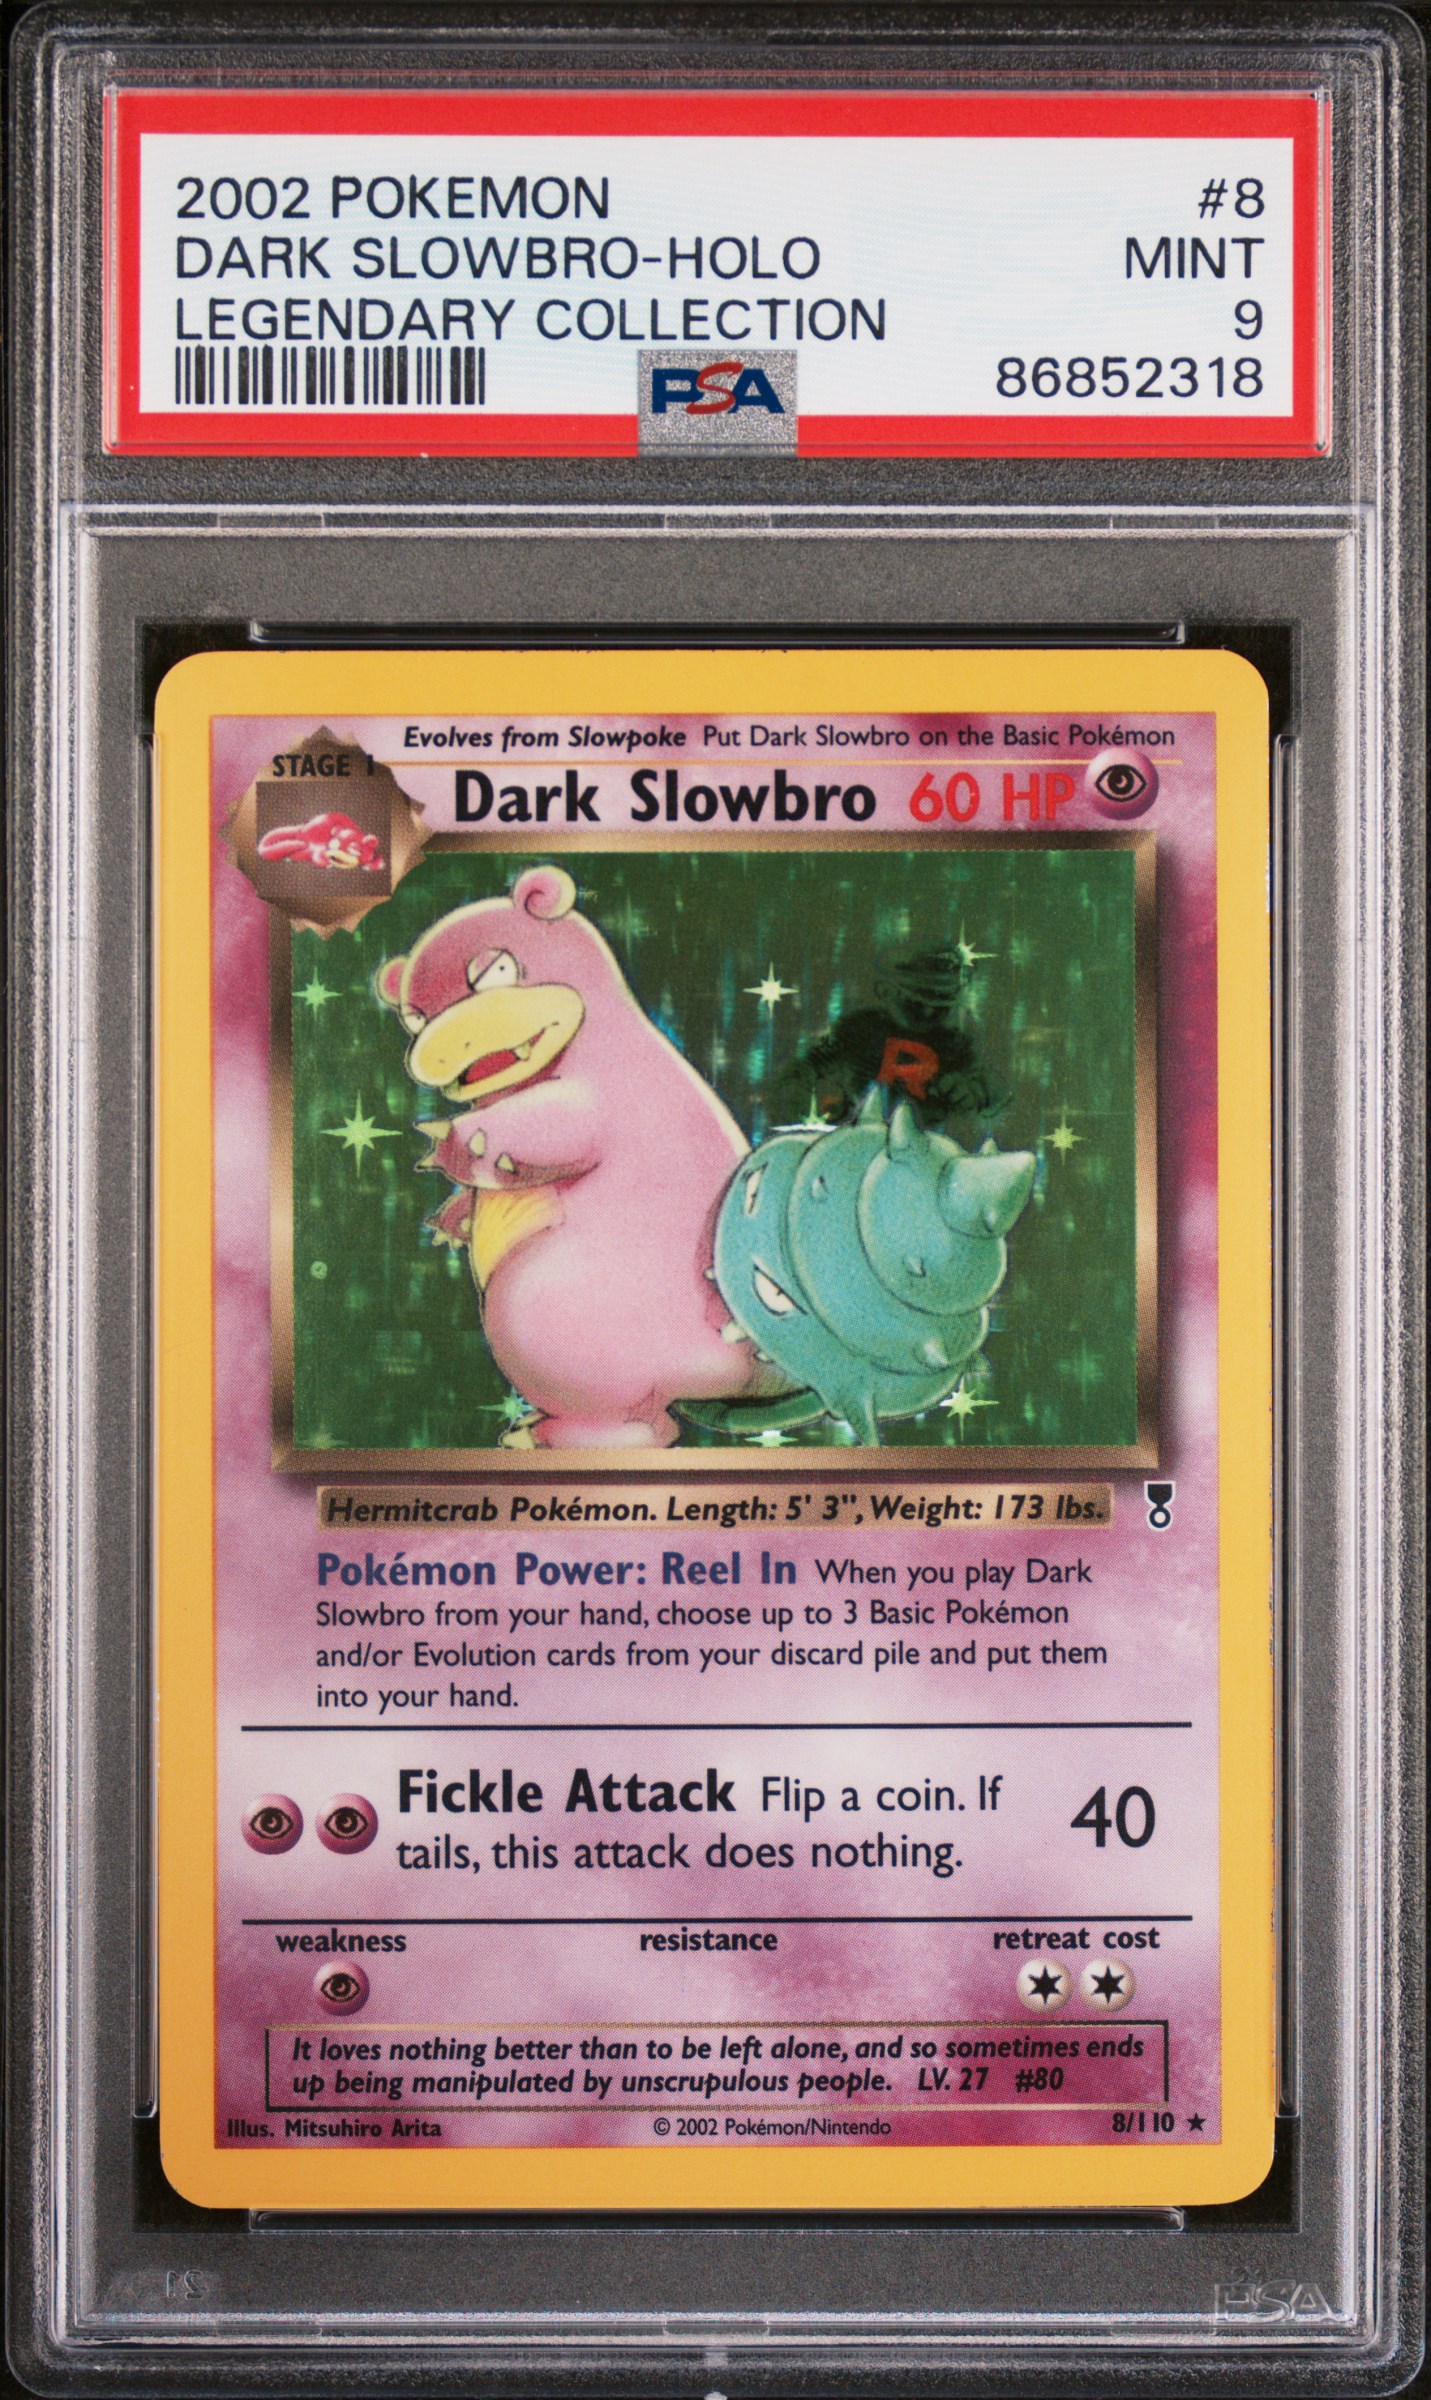 2002 Pokemon Legendary Collection 8 Dark Slowbro-Holo – PSA MINT 9